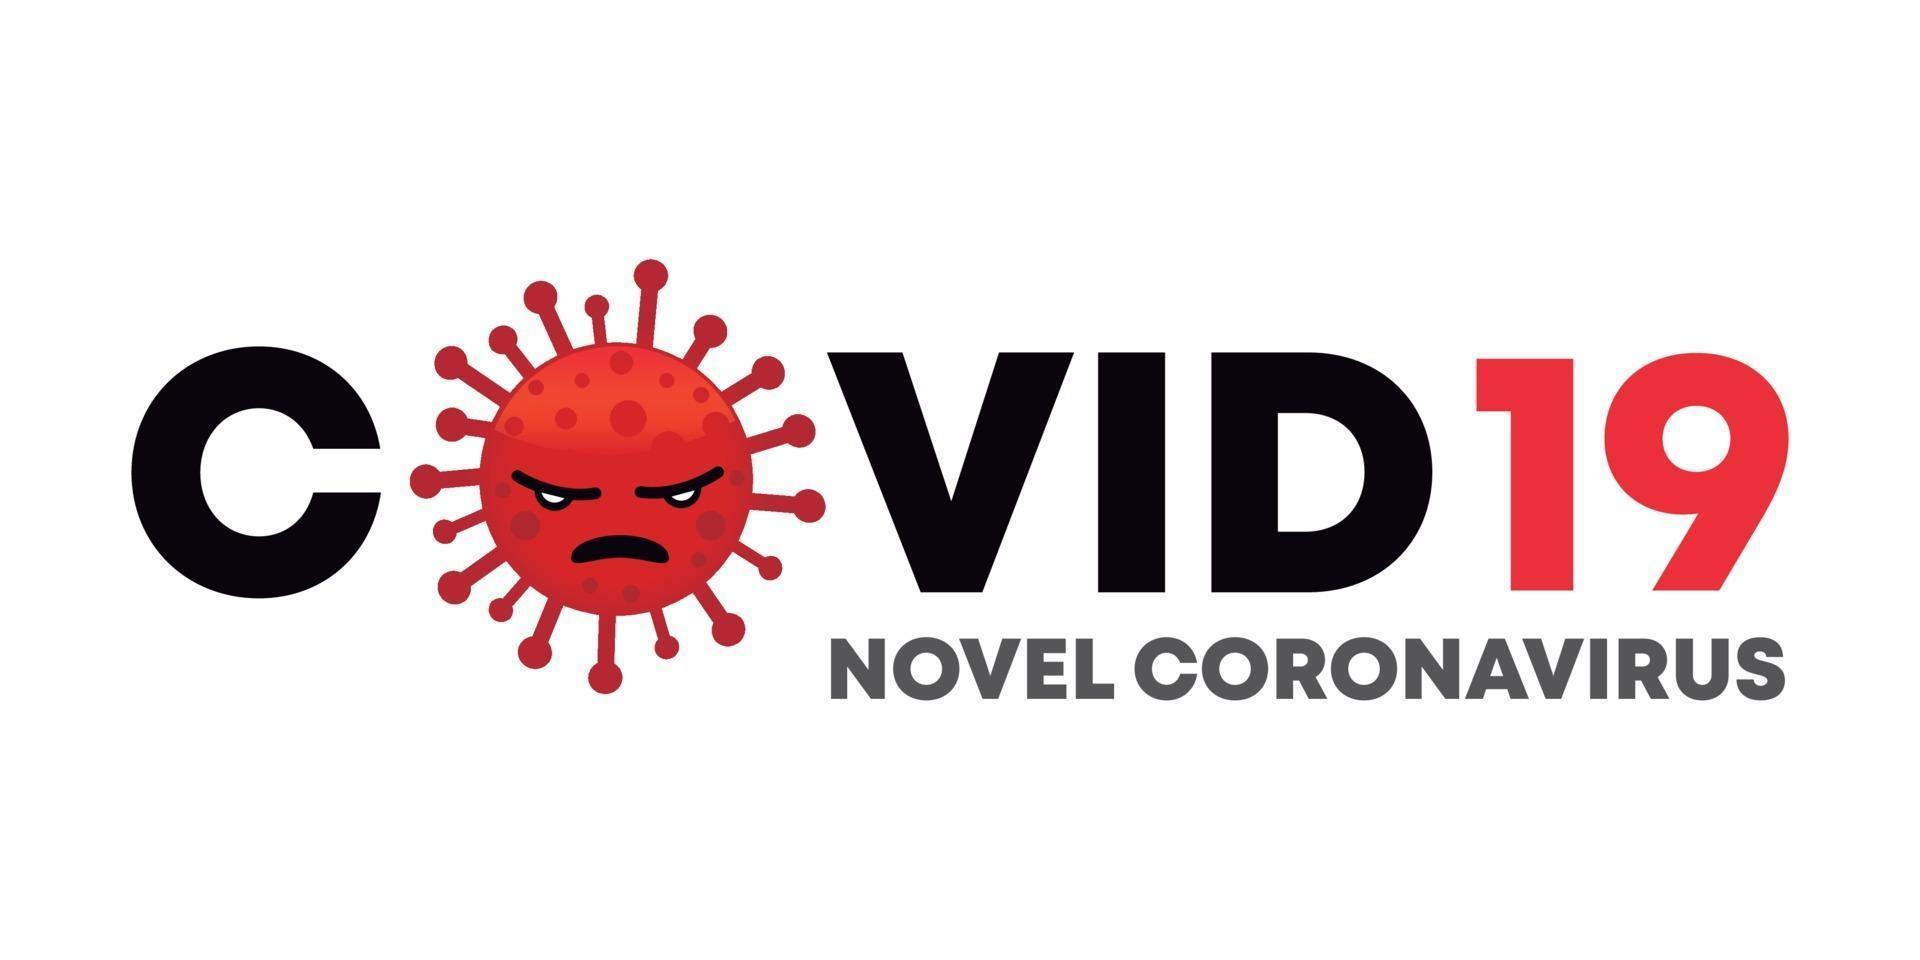 Covid 19 Novel coronavirus cartoon virus design vector